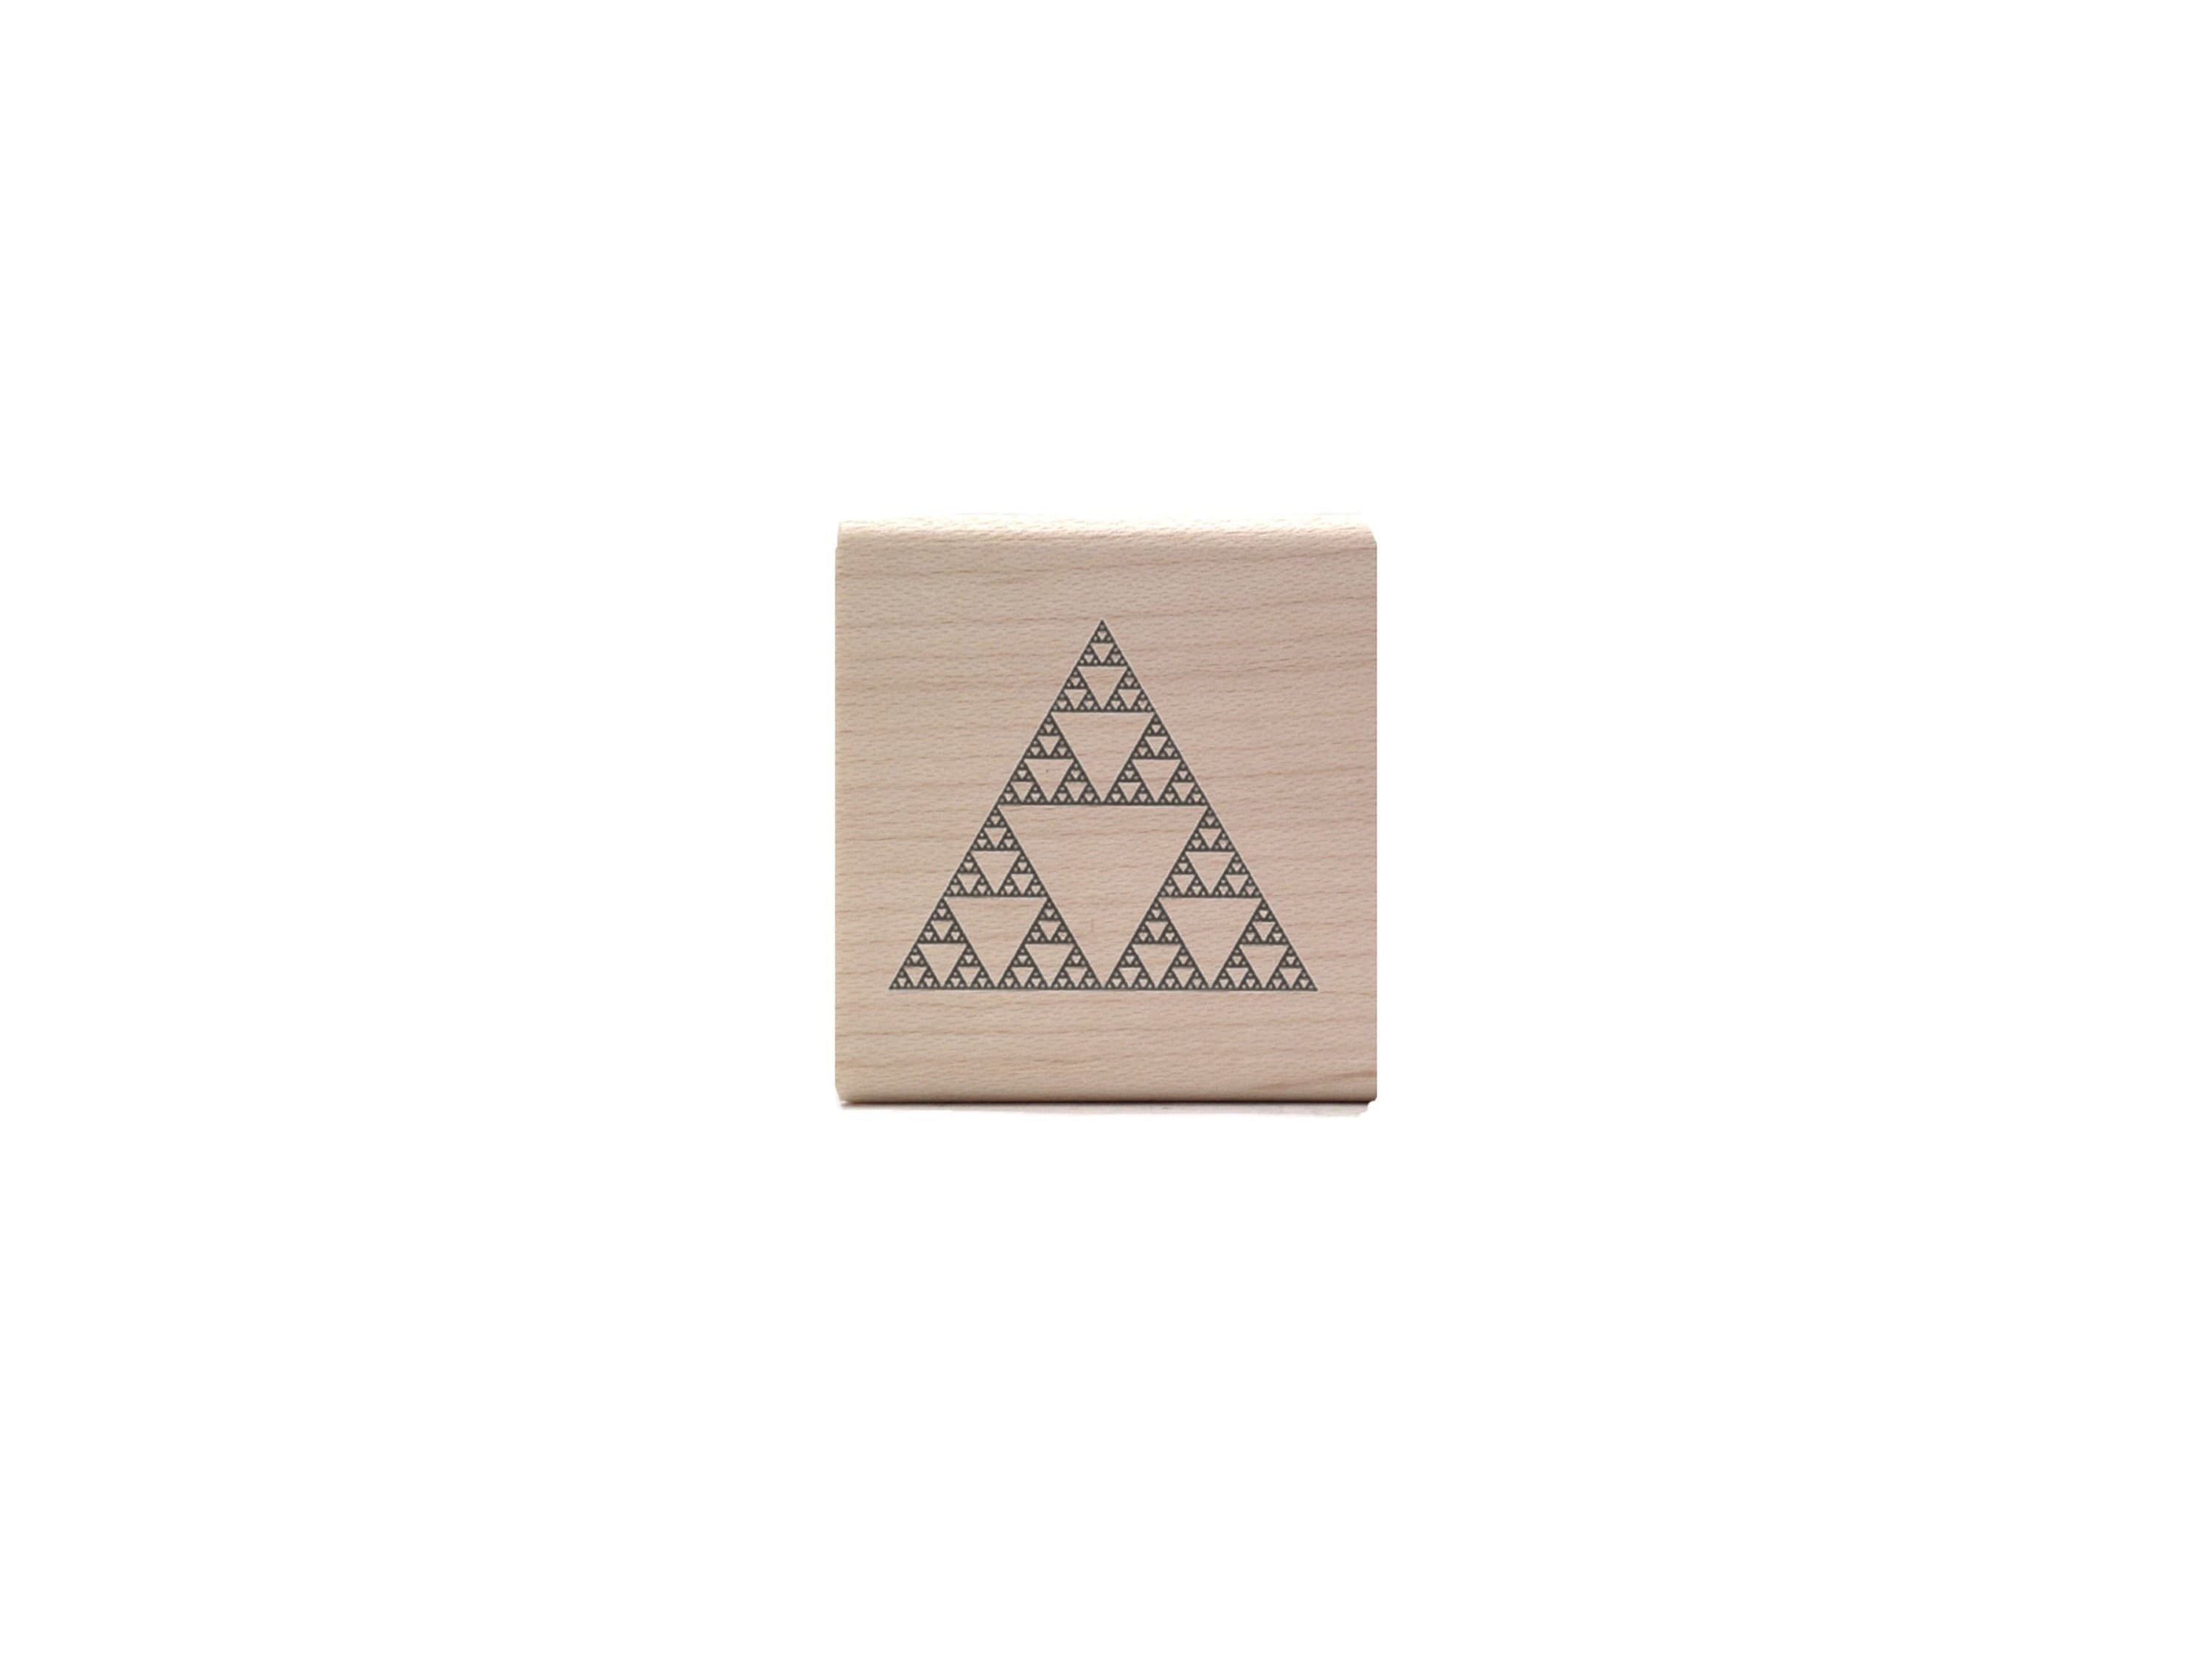 Sierpinski Triangle Rubber Stamp - Mandelbrot & Koch Fractals - STEM